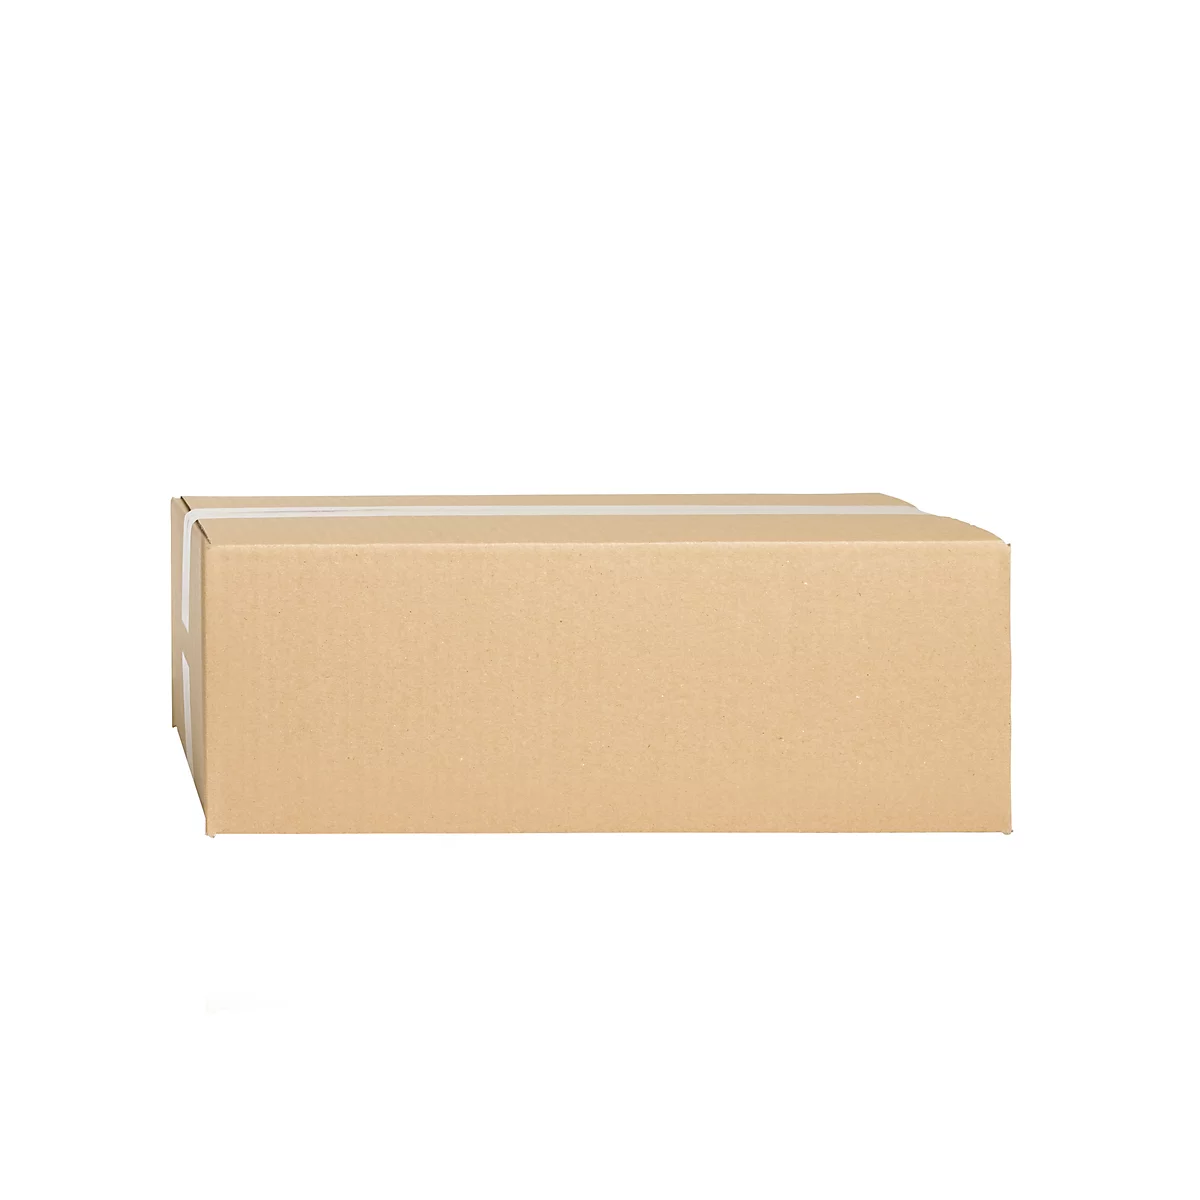 Cajas plegables de cartón ondulado, pared simple, 350 x 250 x 120 mm, marrón